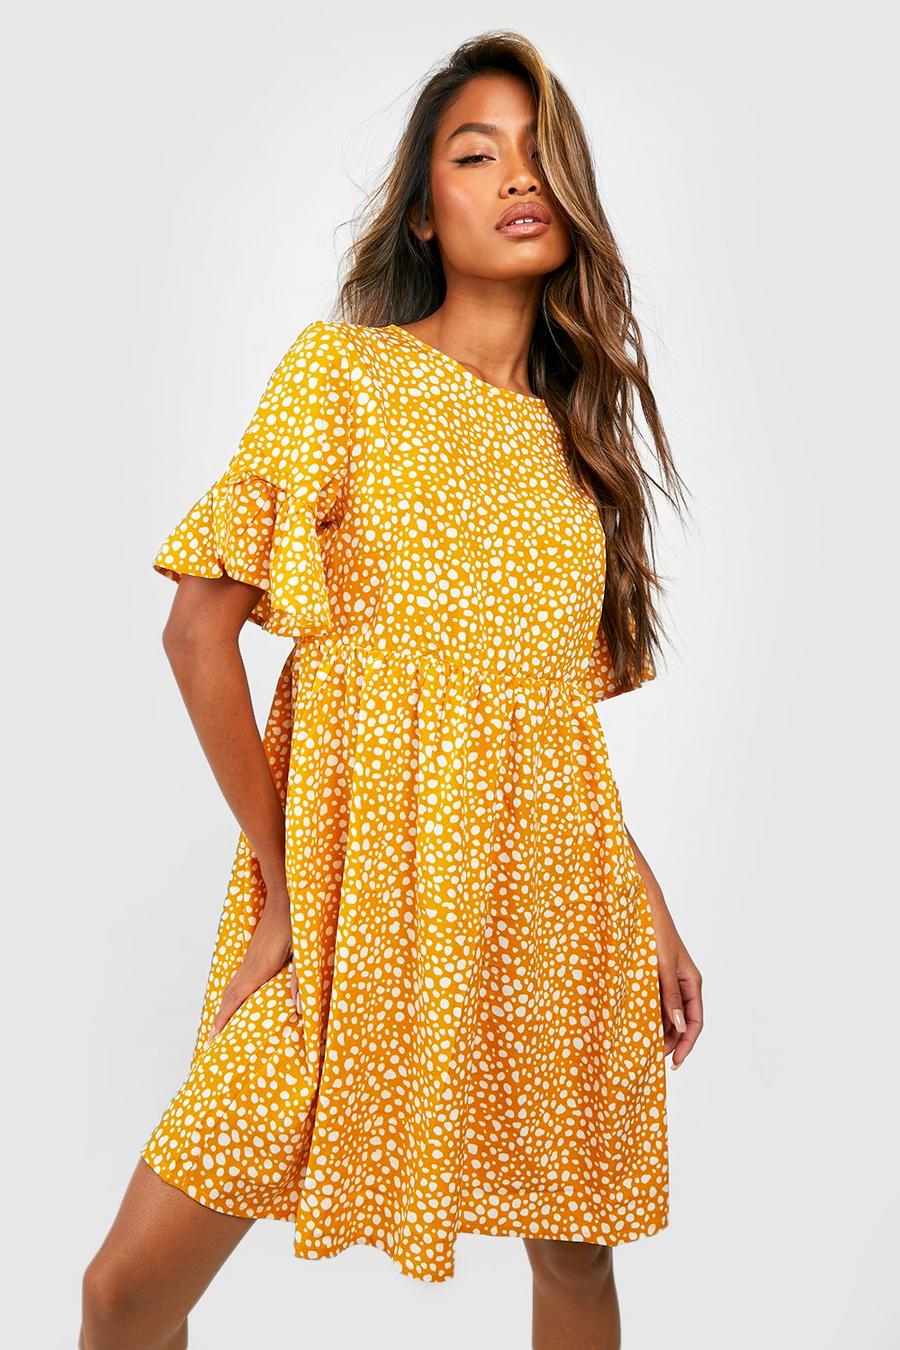 Smok-Kleid mit Dalmatiner-Print, Senfgelb yellow